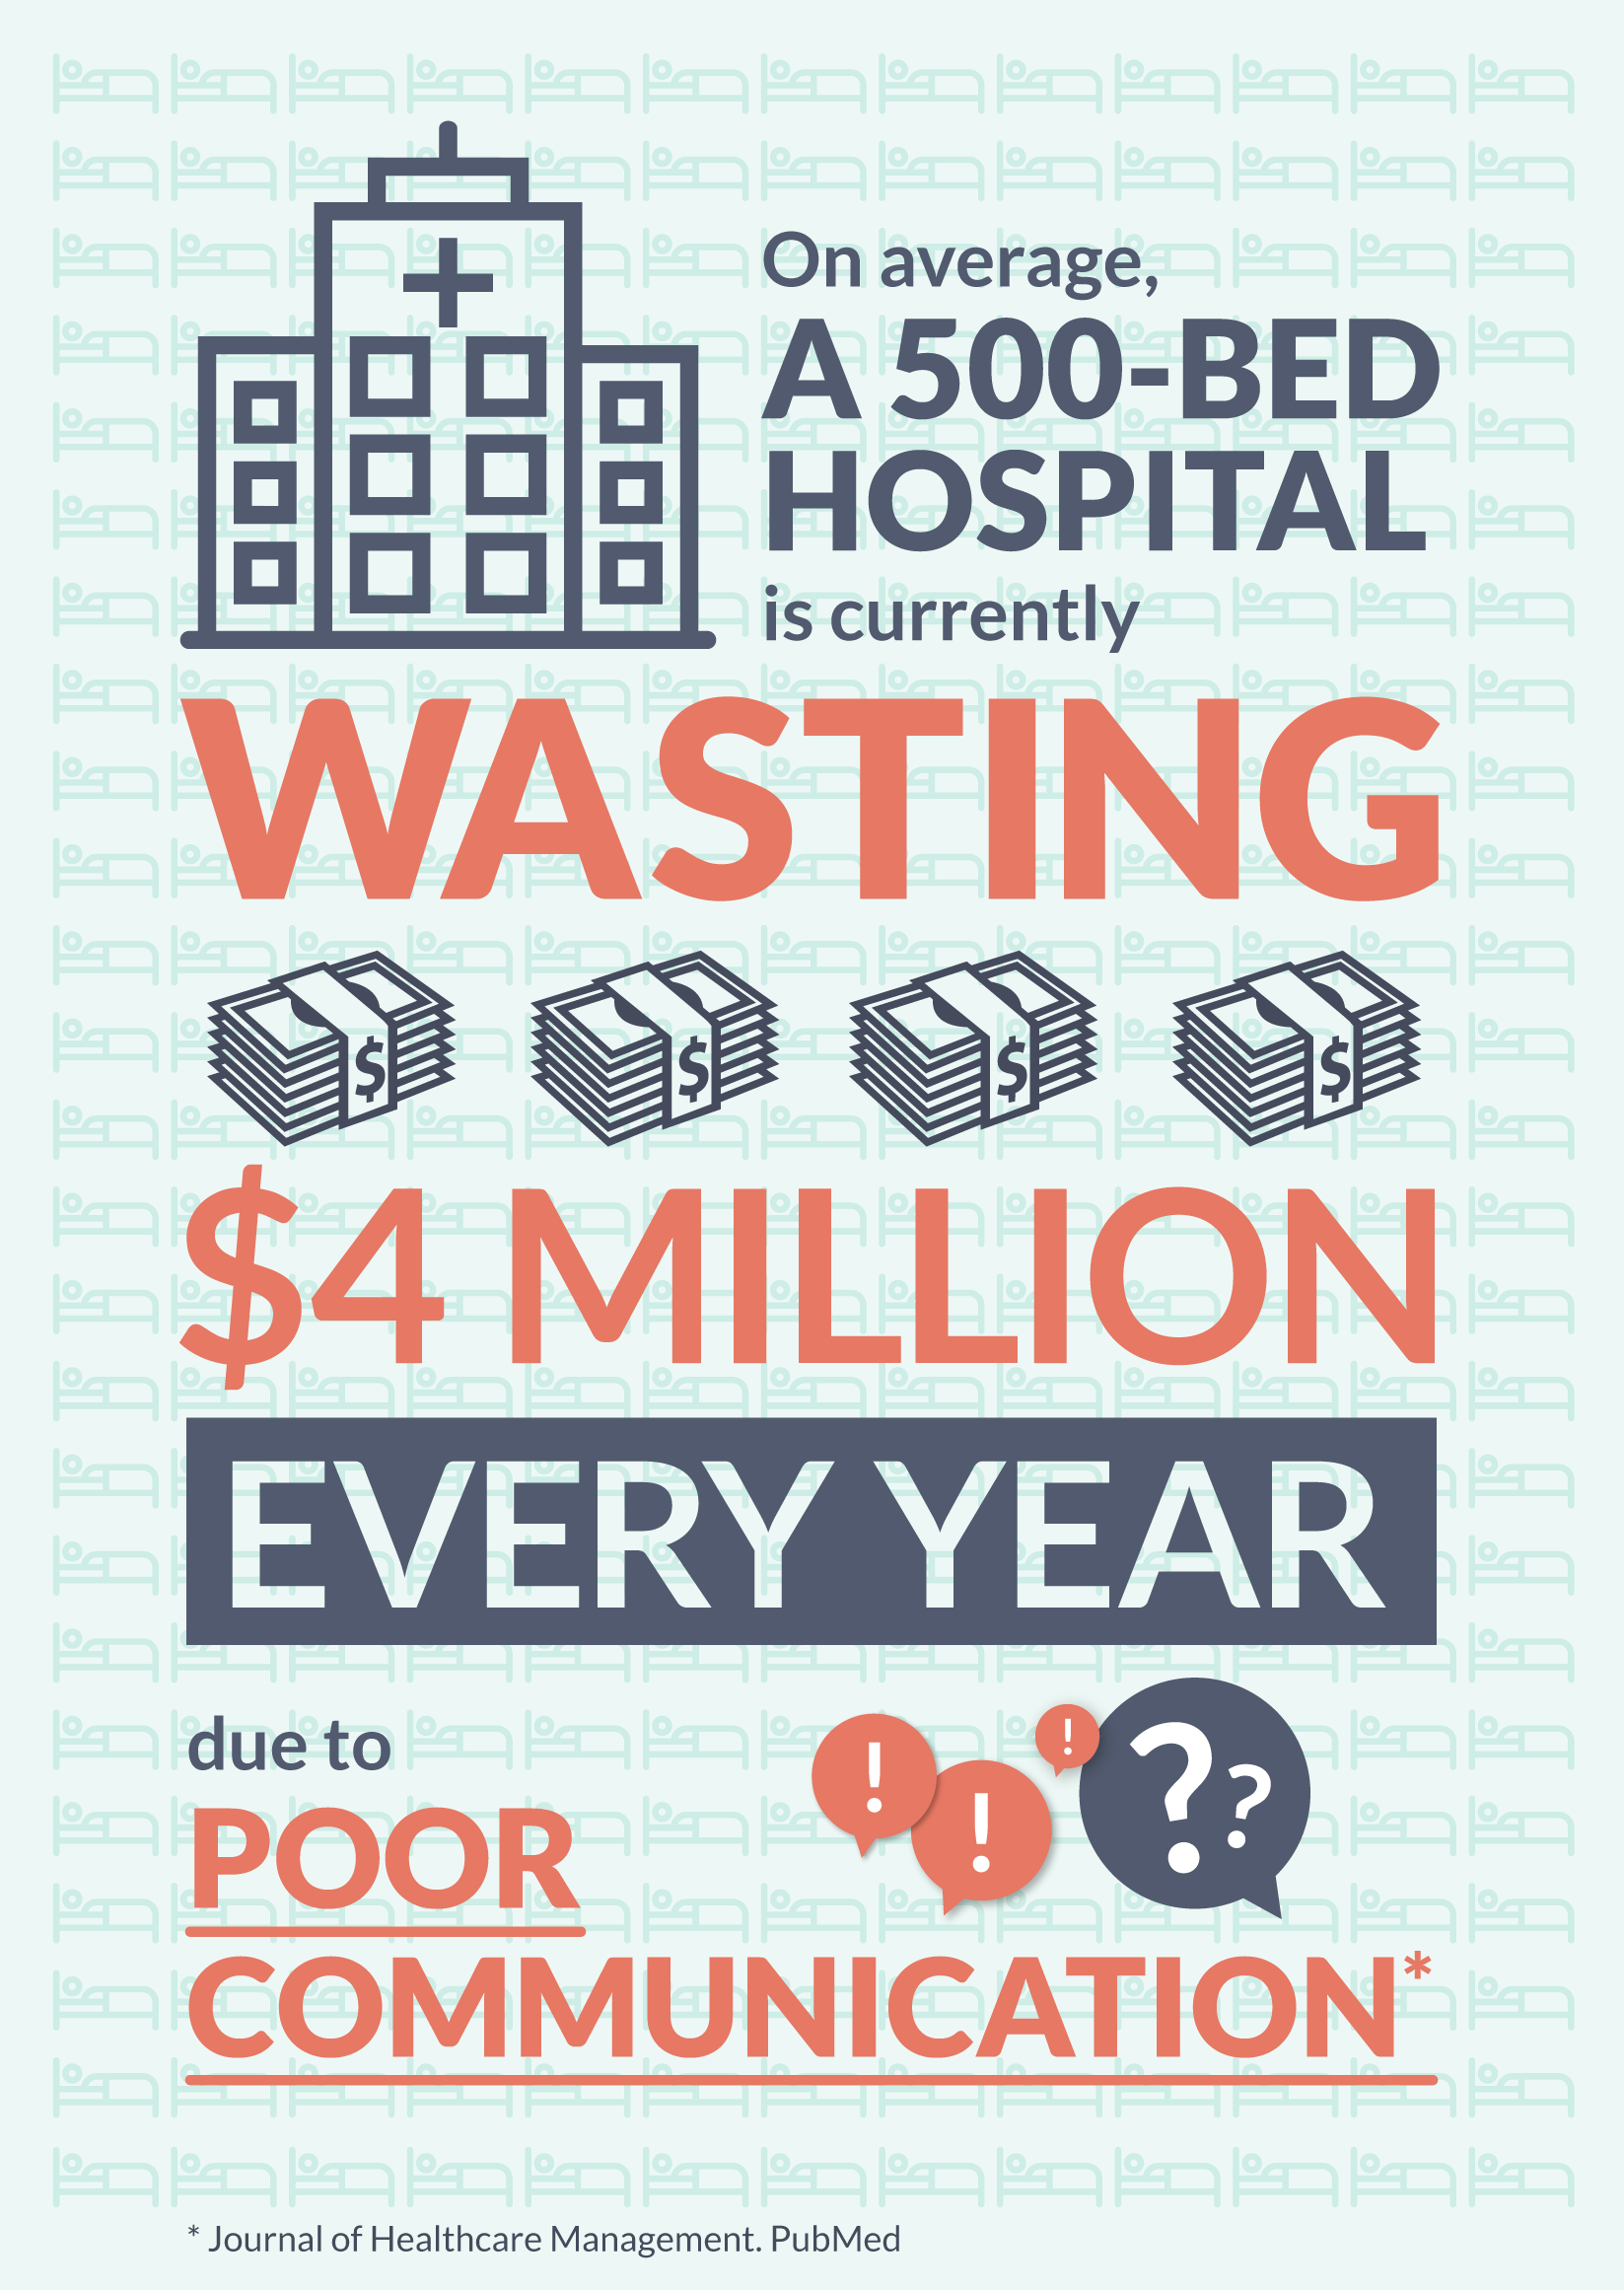 hospital-wasting-4-million-every-year-poor-communication